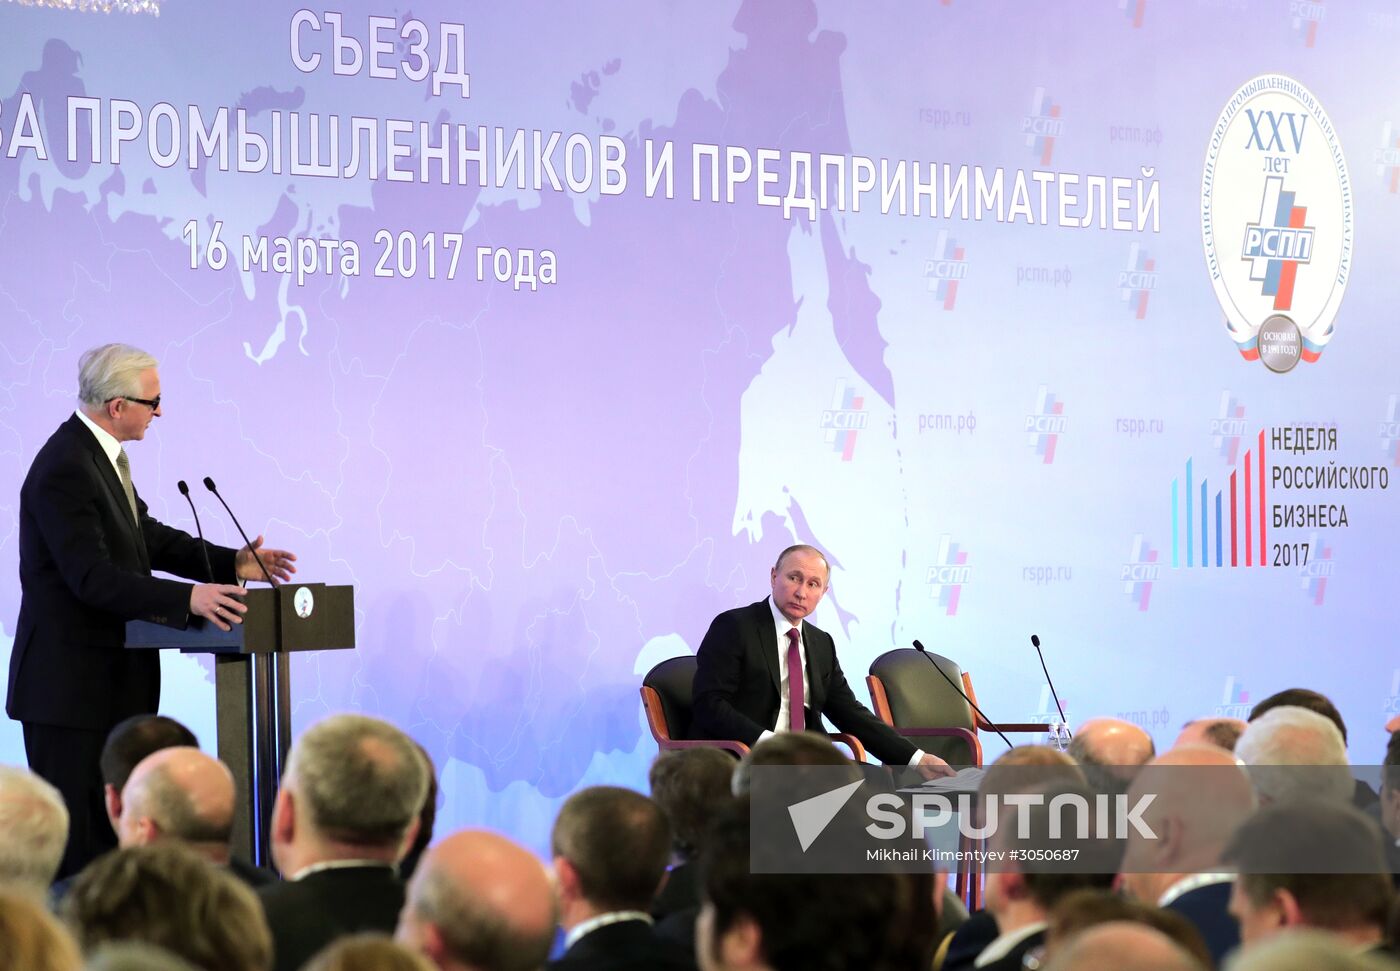 Russian President Vladimir Putin at RUIE Congress